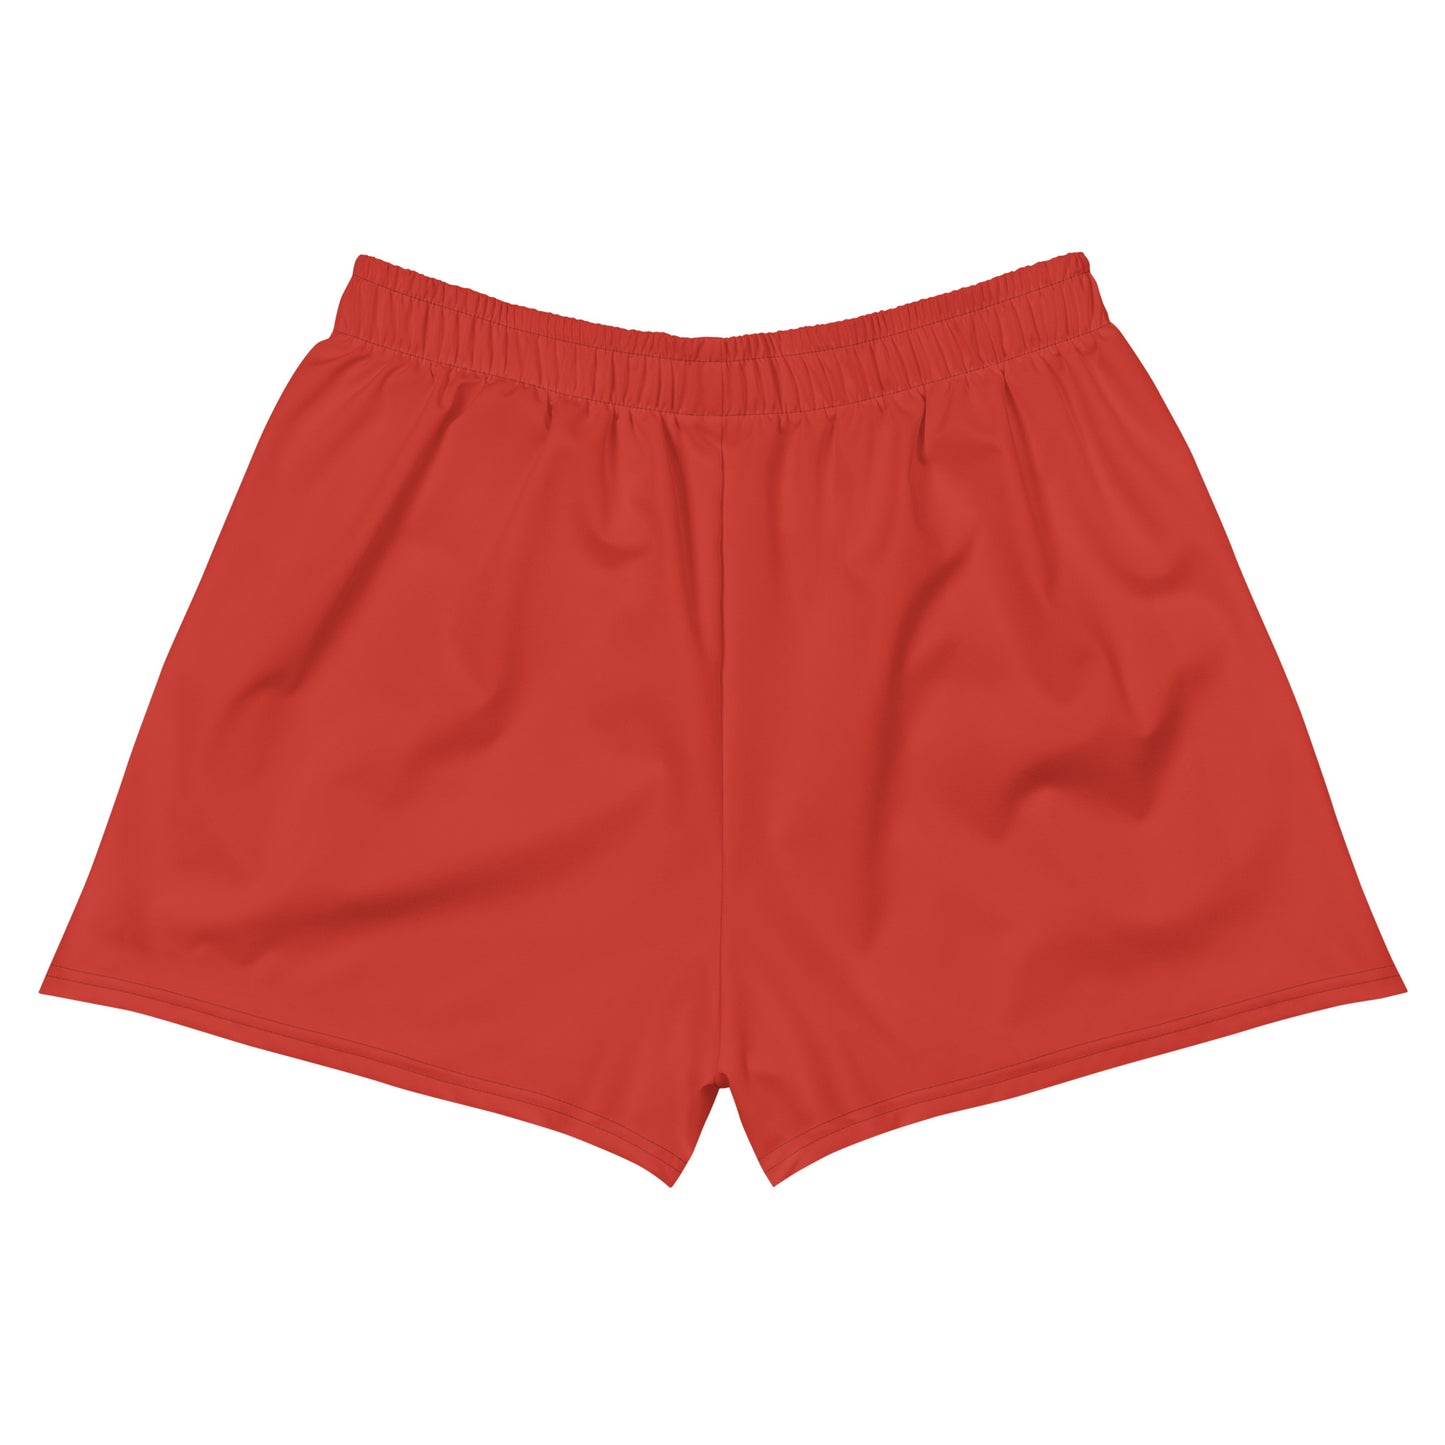 Harley Davidson Red Athletic Shorts